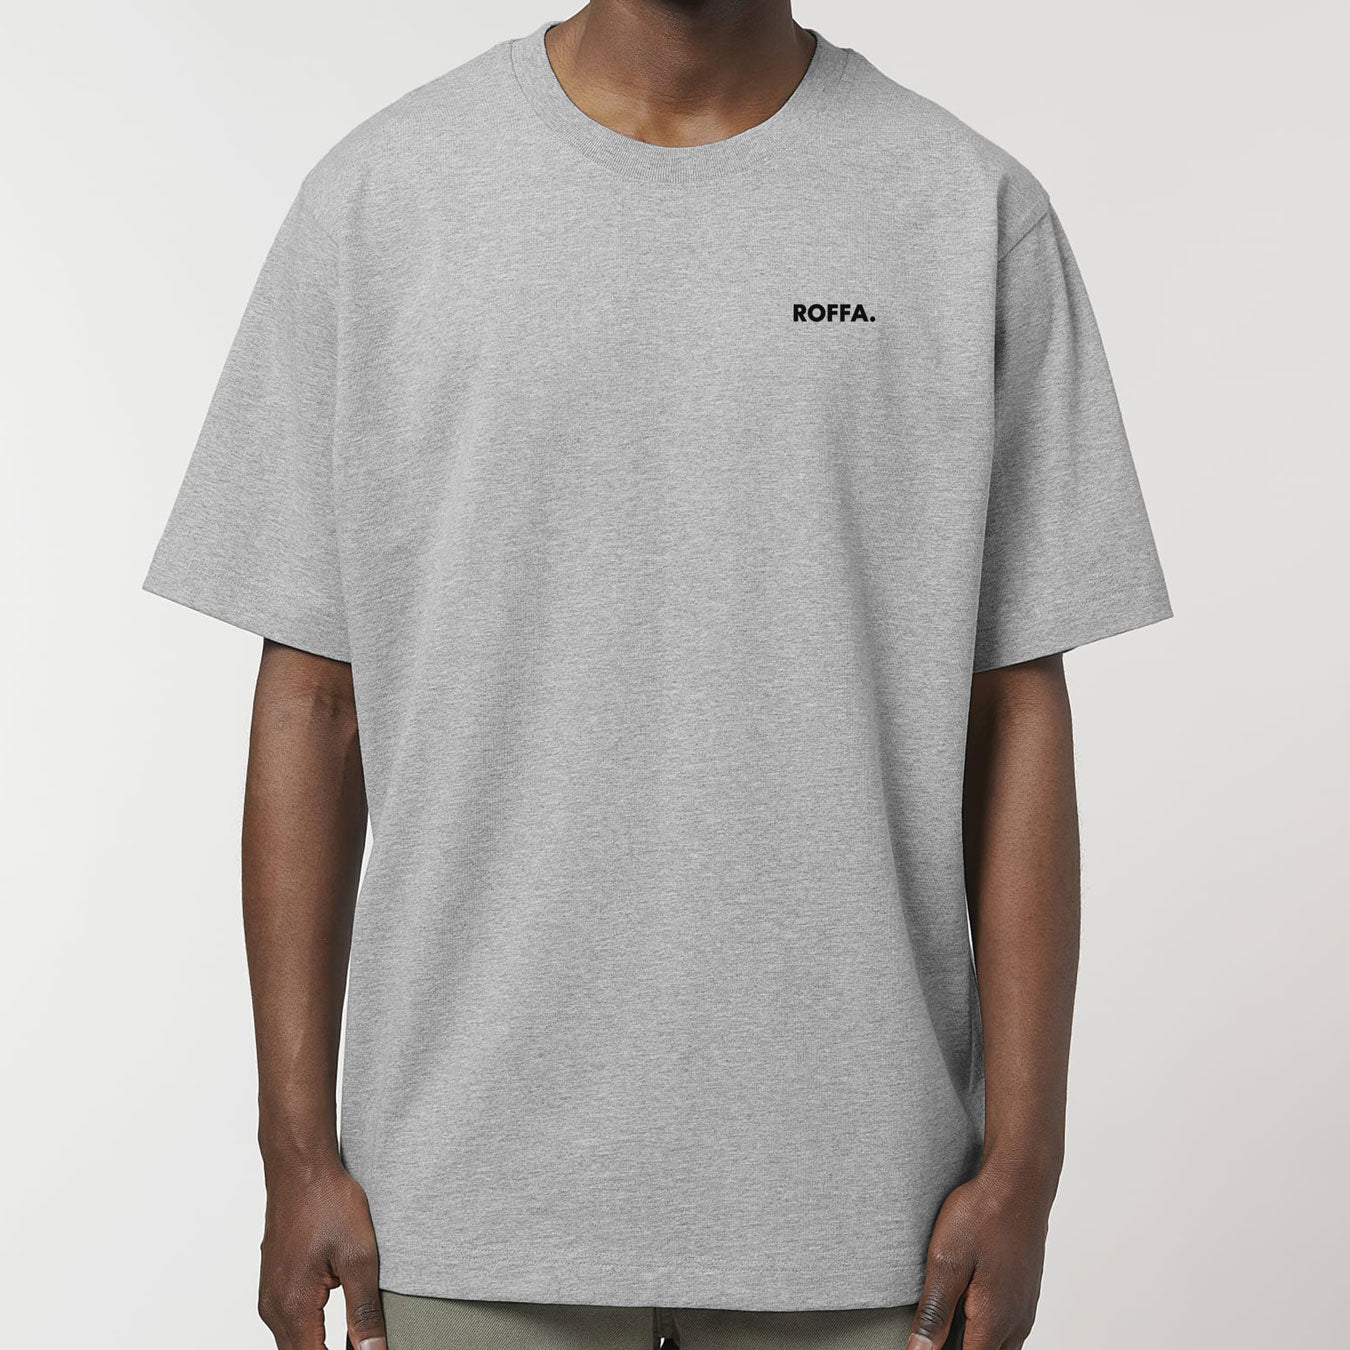 ROFFA. heavy t-shirt oversized - de Kuip - 100% organisch katoen